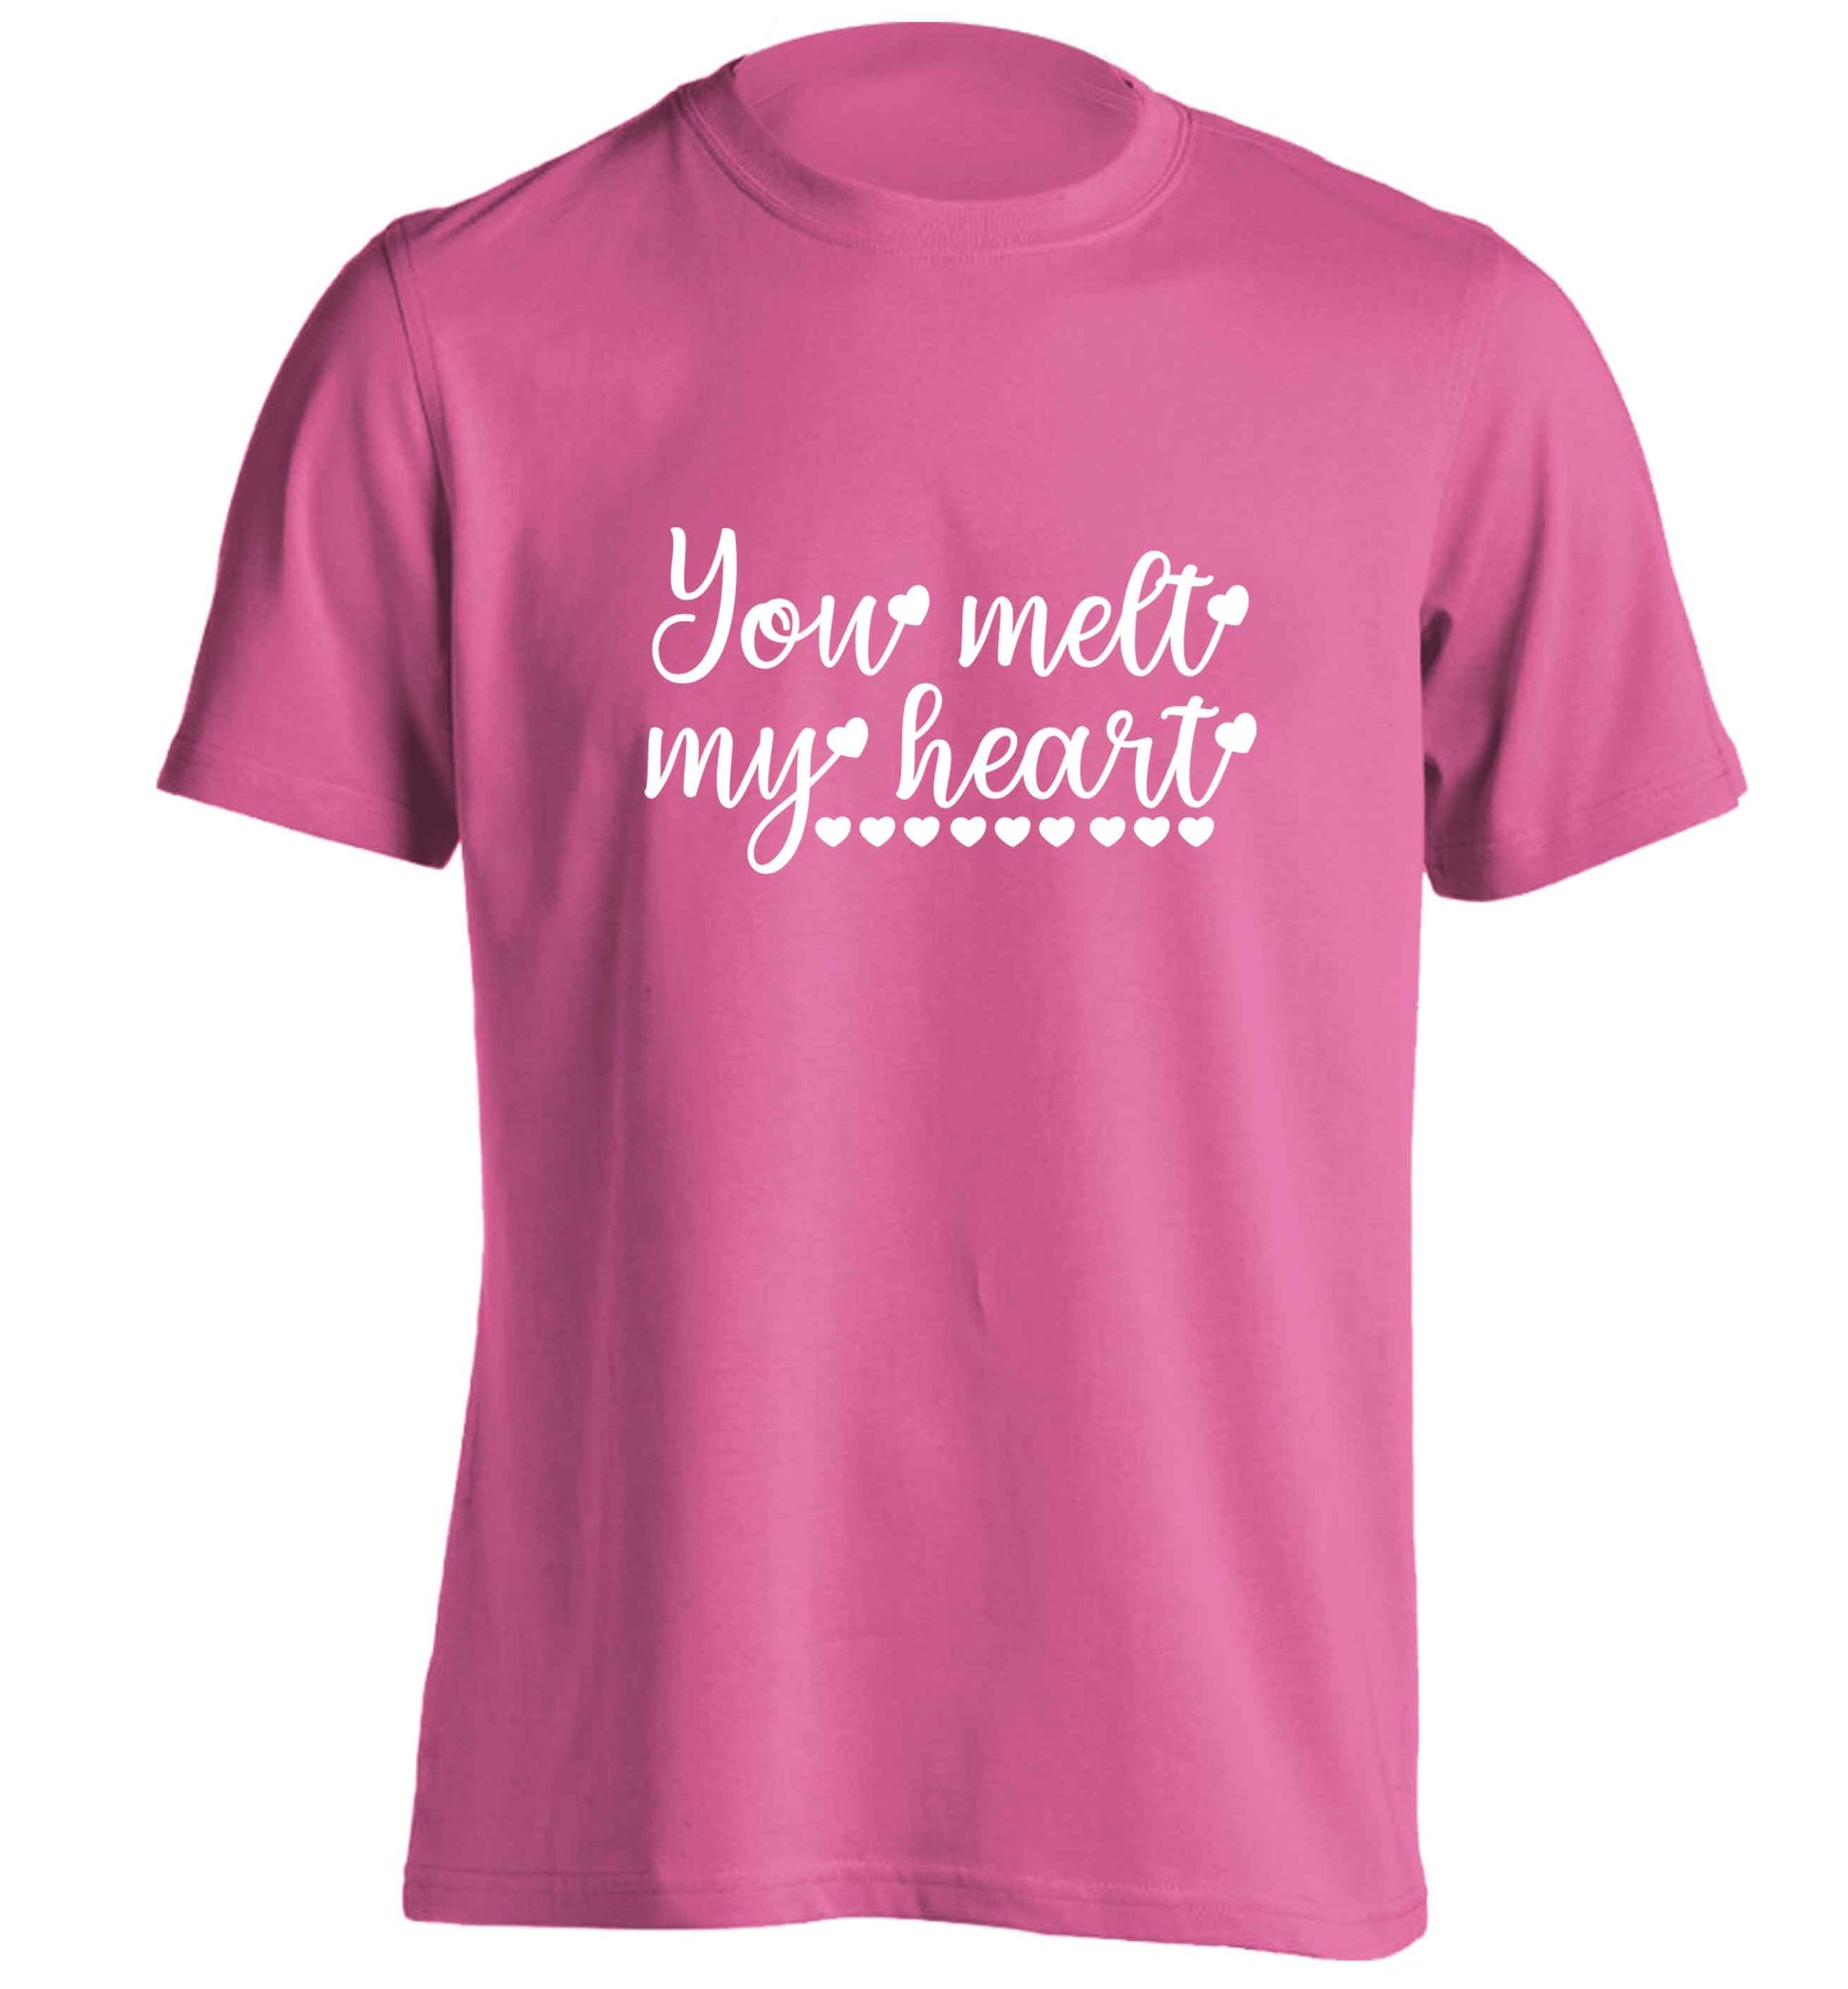 You melt my heart adults unisex pink Tshirt 2XL